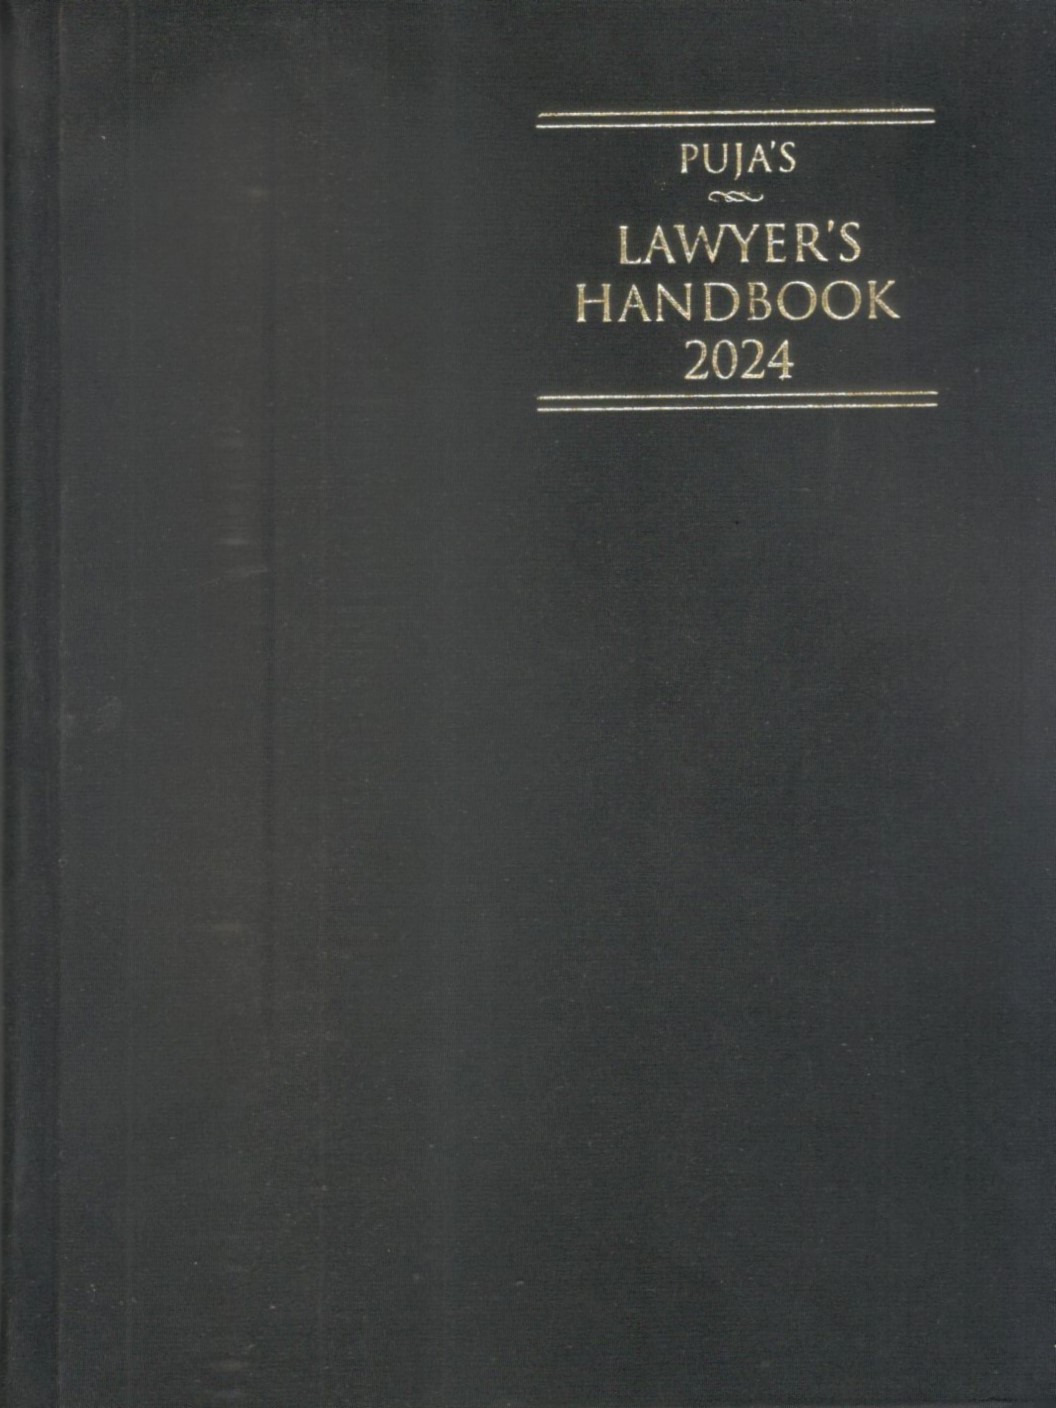 Puja’s Lawyer’s Handbook 2024 - Black Small Size Regular Hardbound